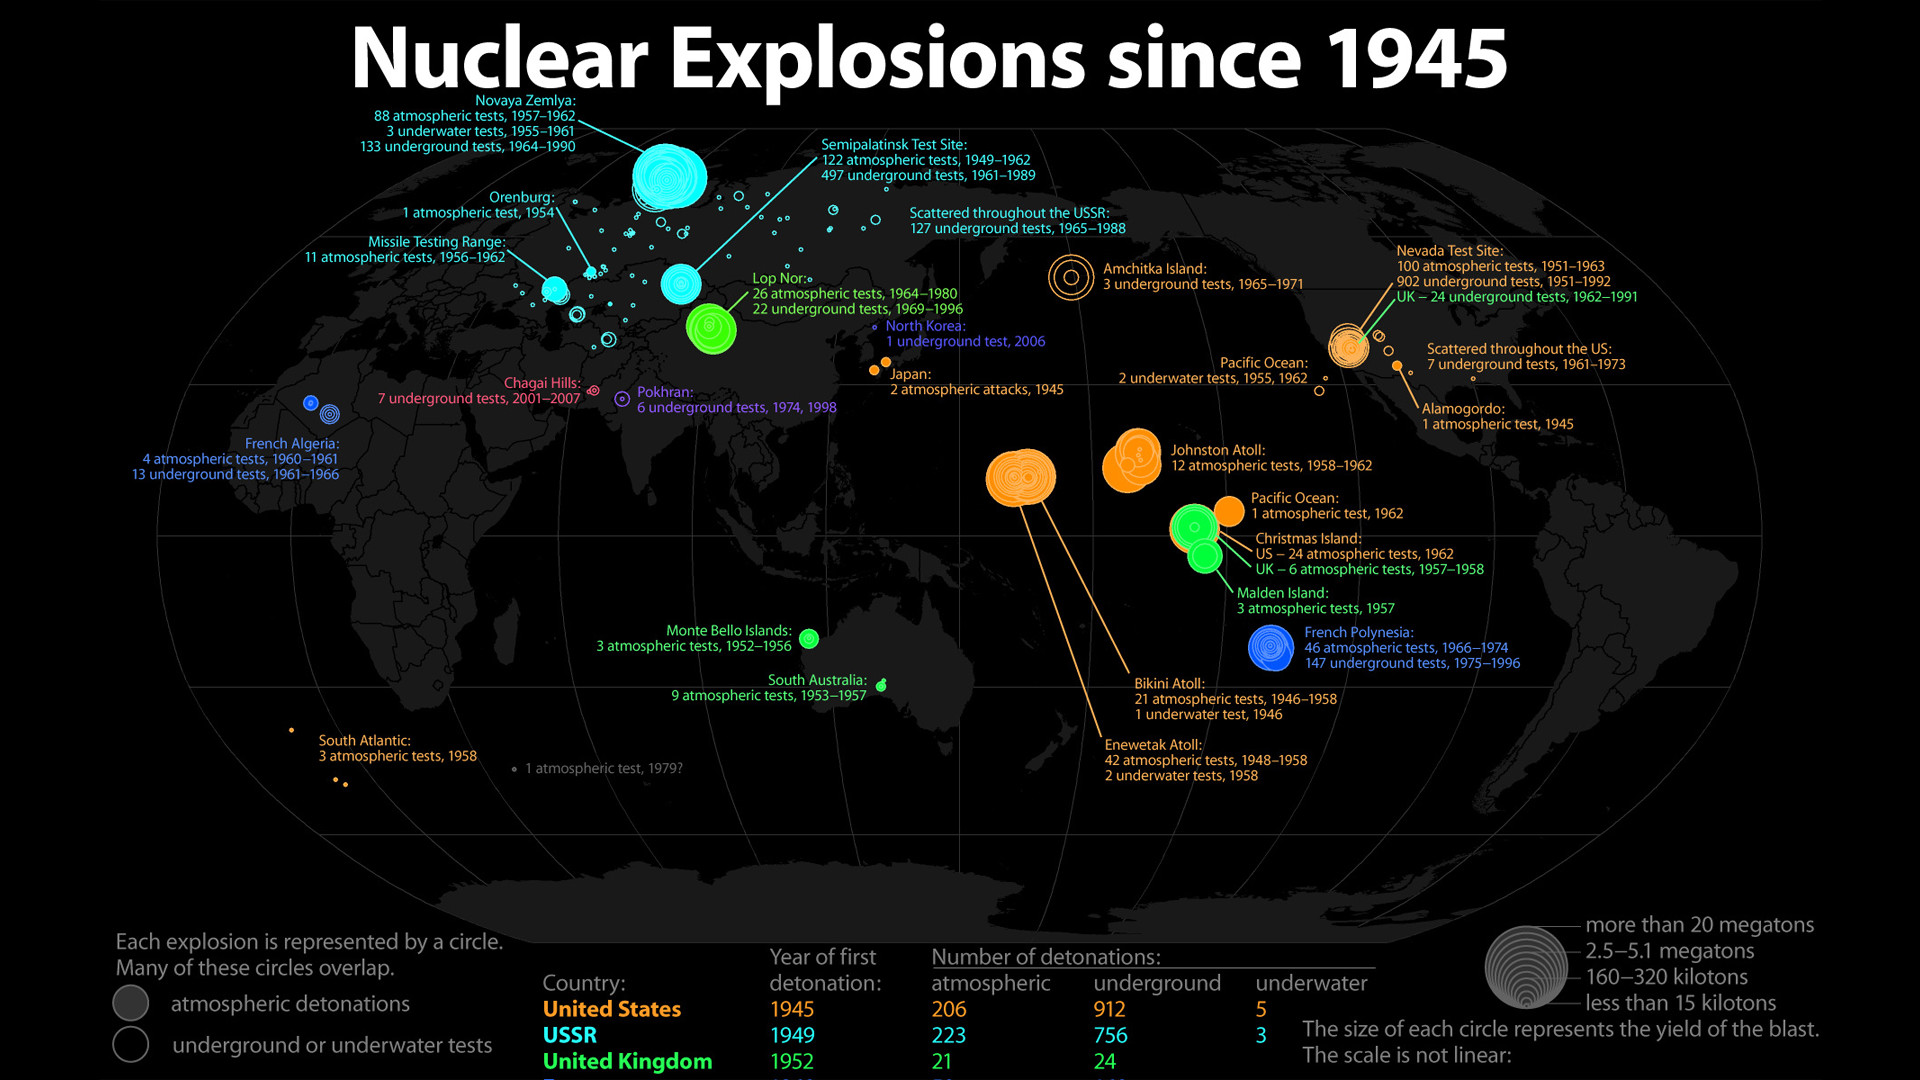 1920x1080 Nuclear Explosions Since 1945 HD Wallpaper. Â« Â»